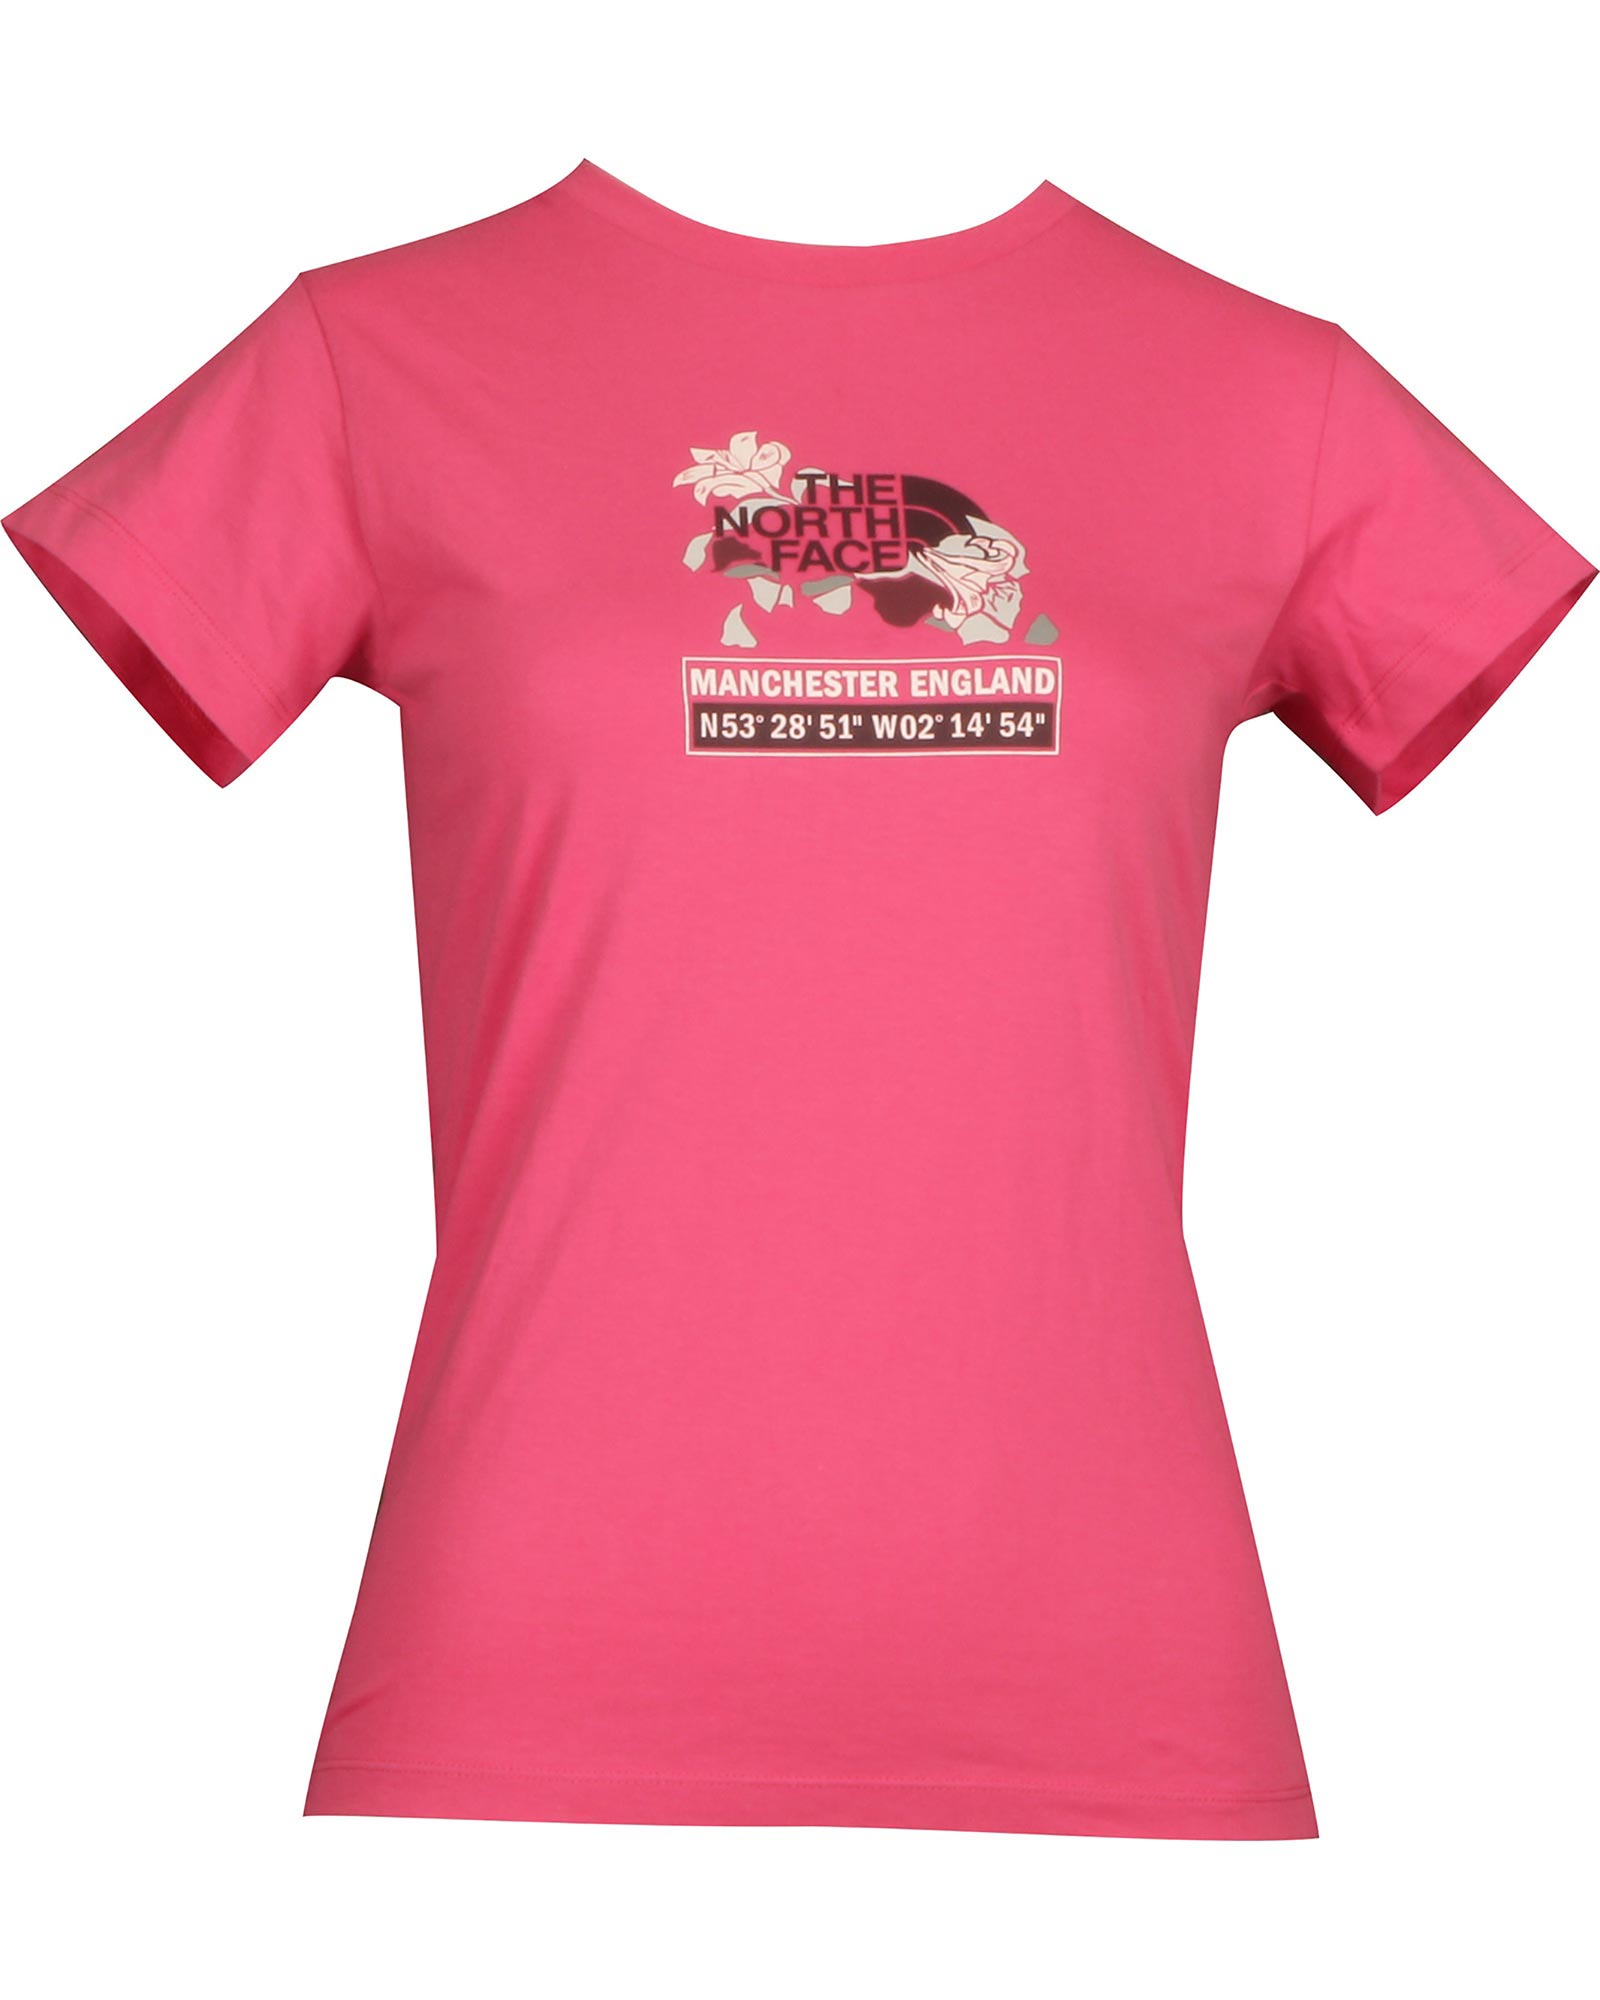 The North Face Manchester GPS Logo Women’s T Shirt - Fuchsia M